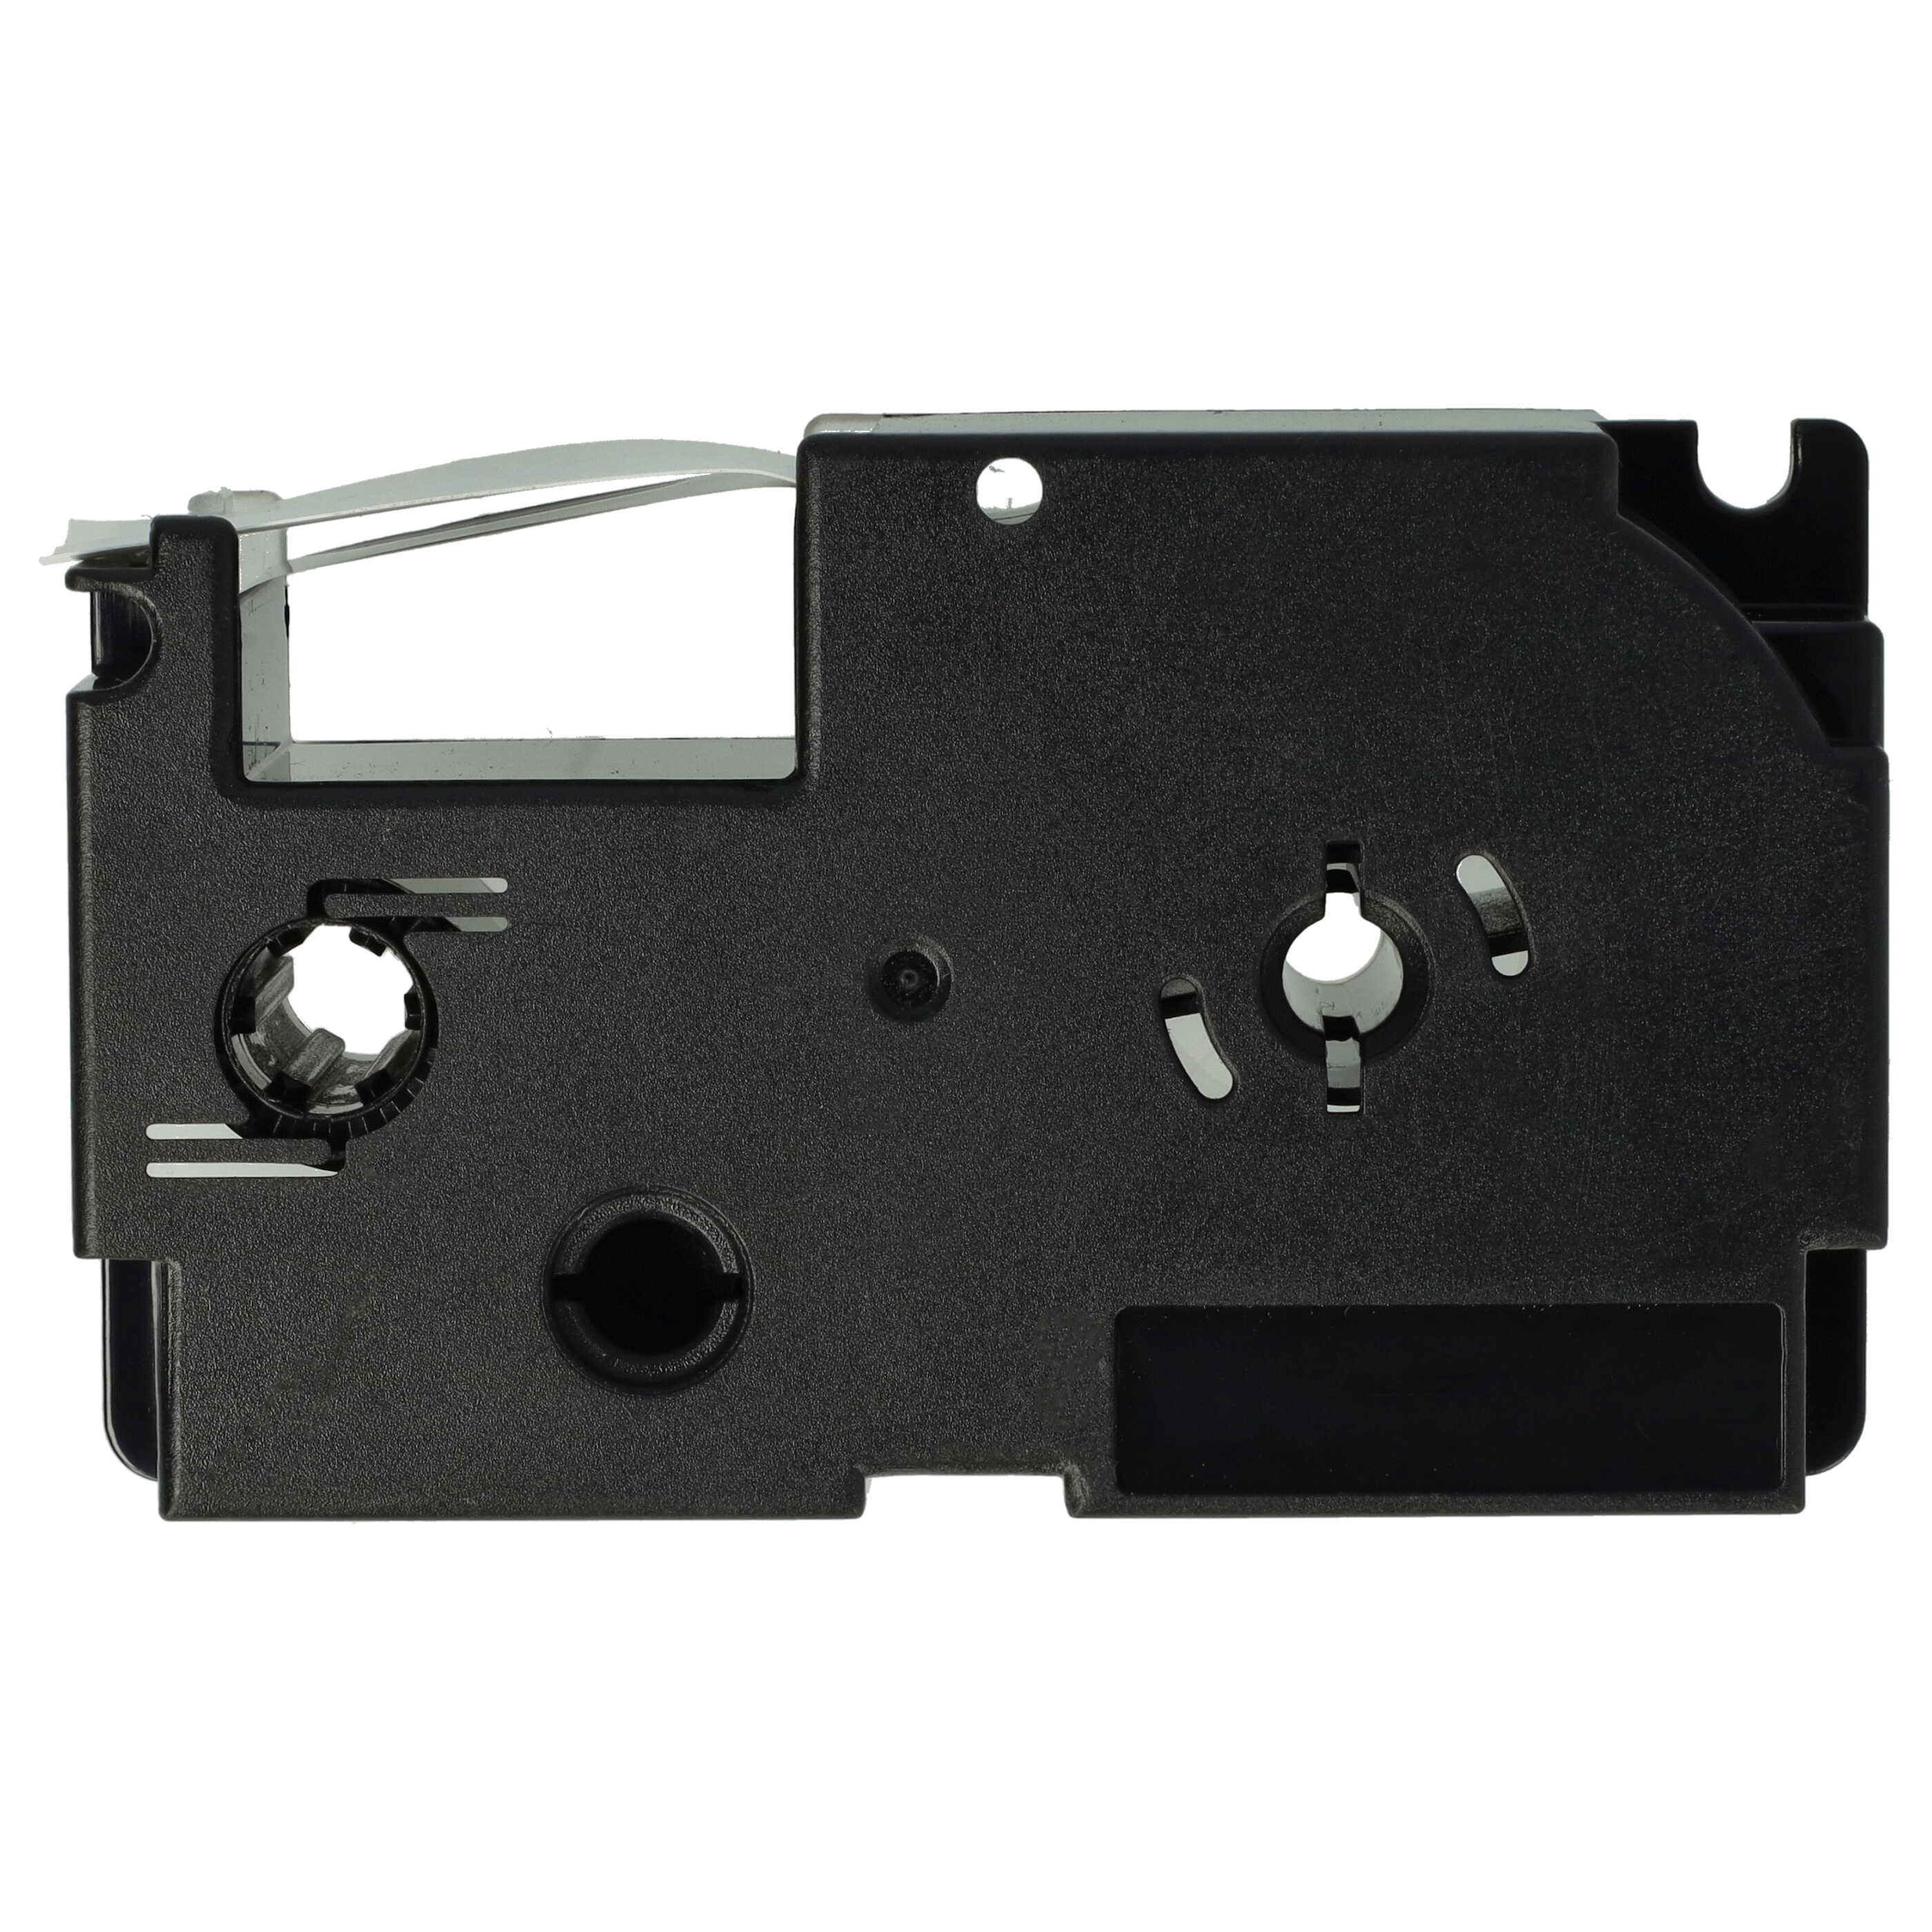 Cassetta nastro sostituisce Casio XR-24WE1, XR-24WE per etichettatrice Casio 24mm nero su bianco